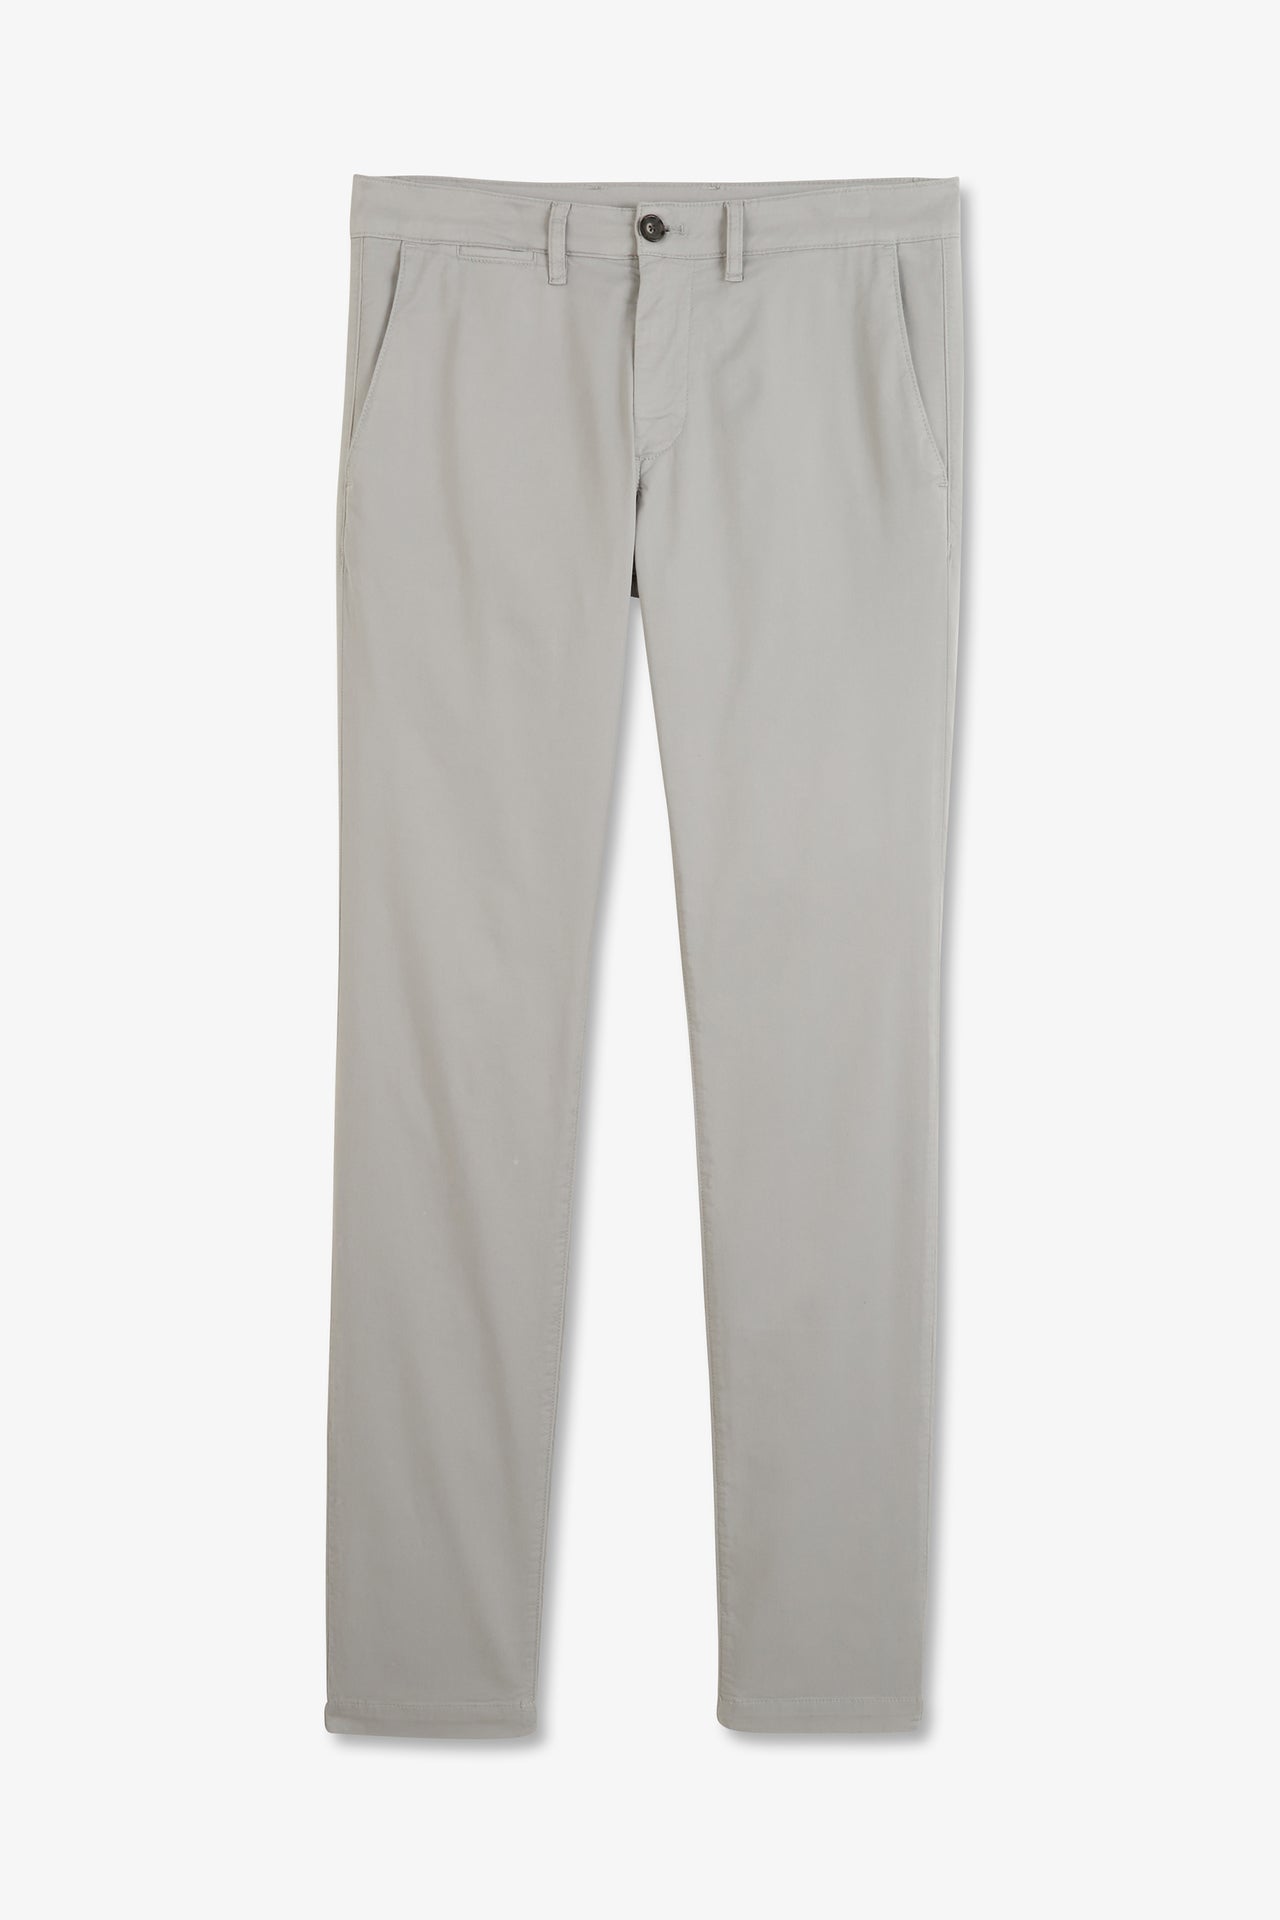 Pantalon chino gris - Image 2